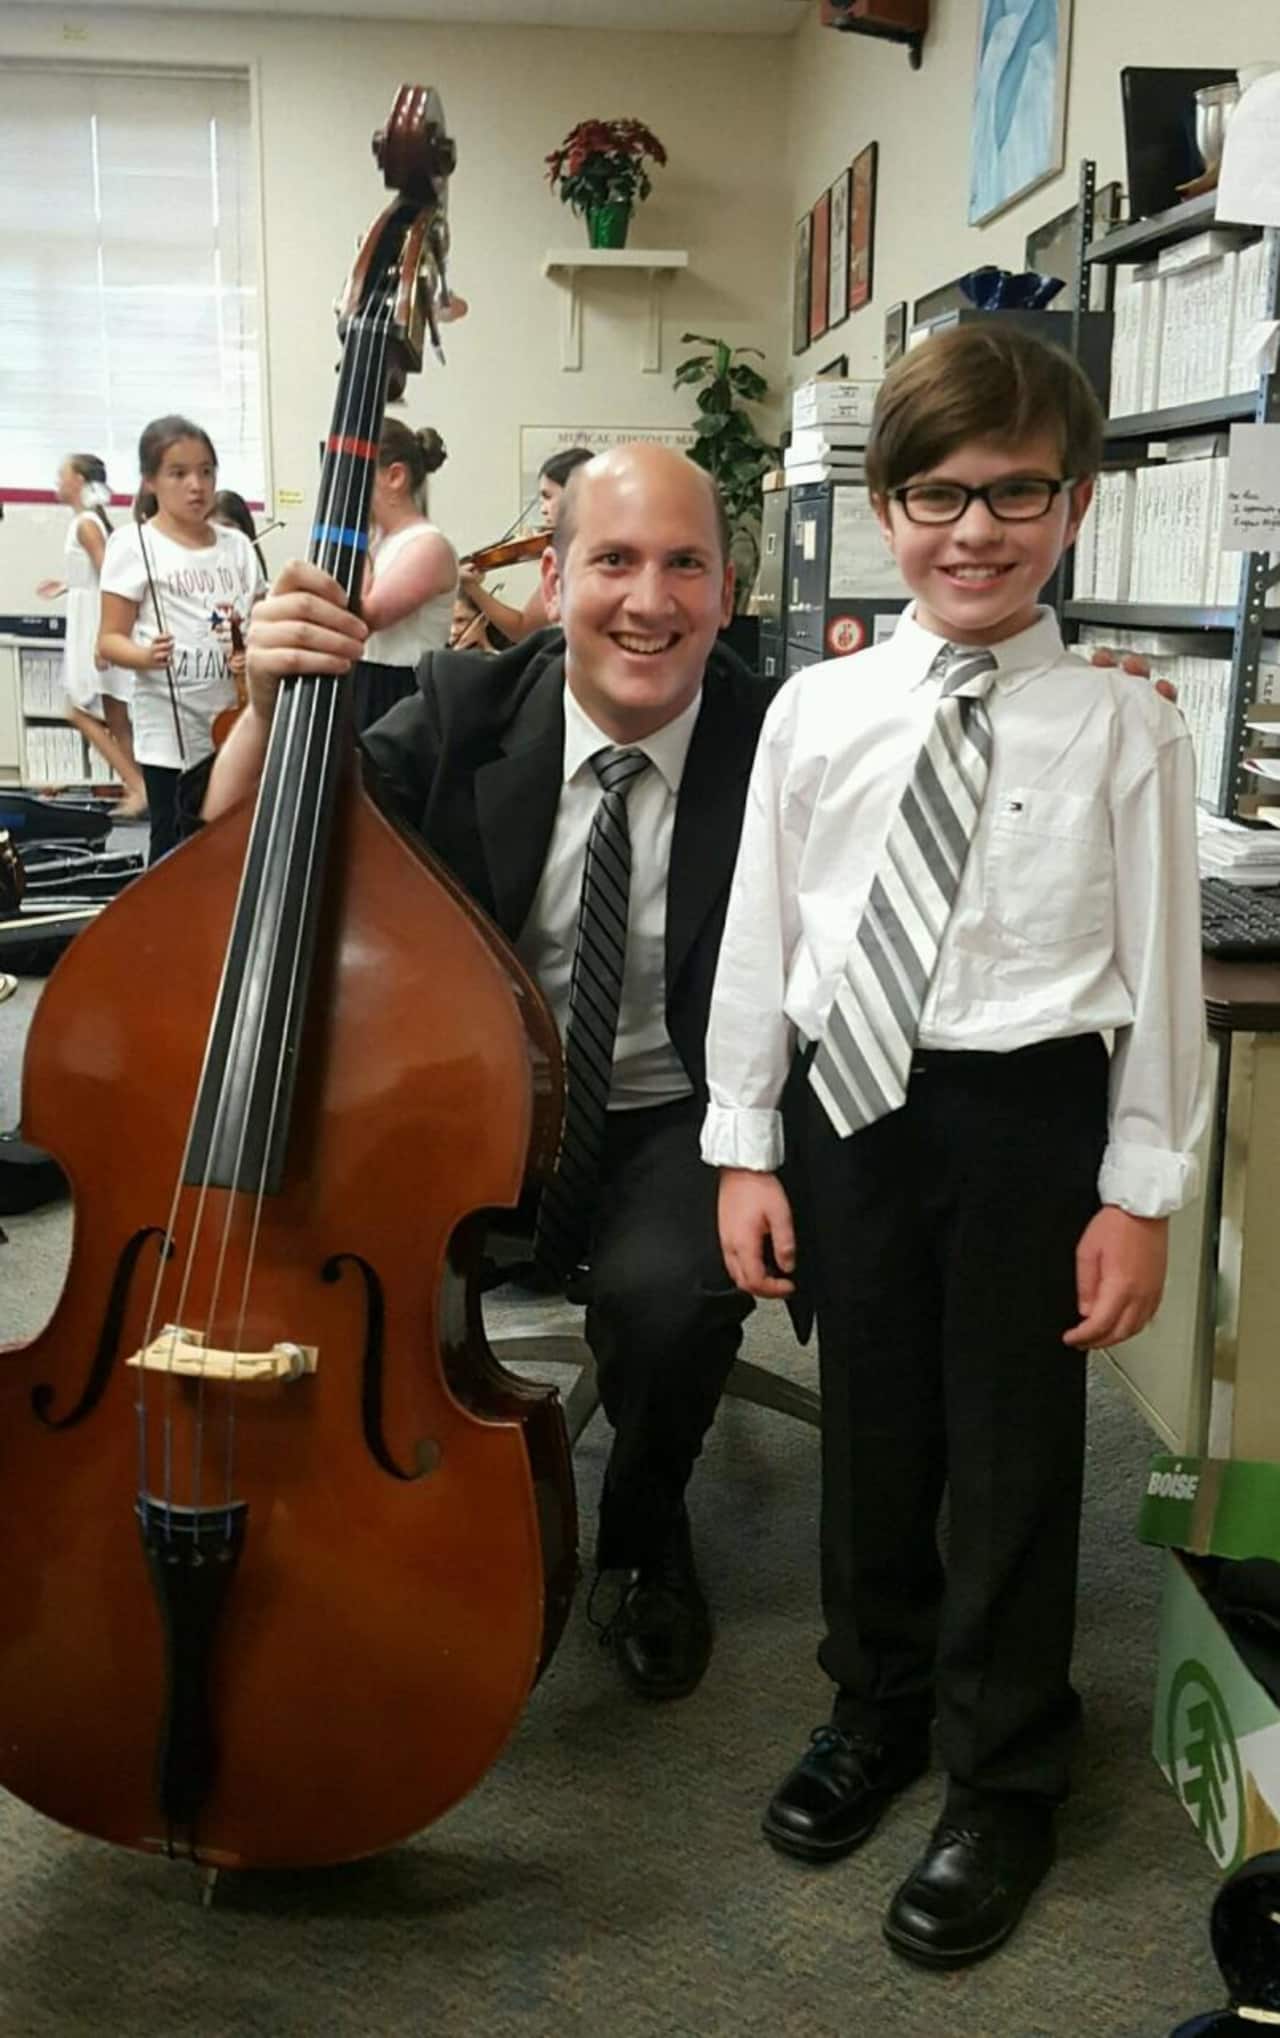 Music teacher Matt Rotjan, left, is seen here with a student in the South Orangetown school district.